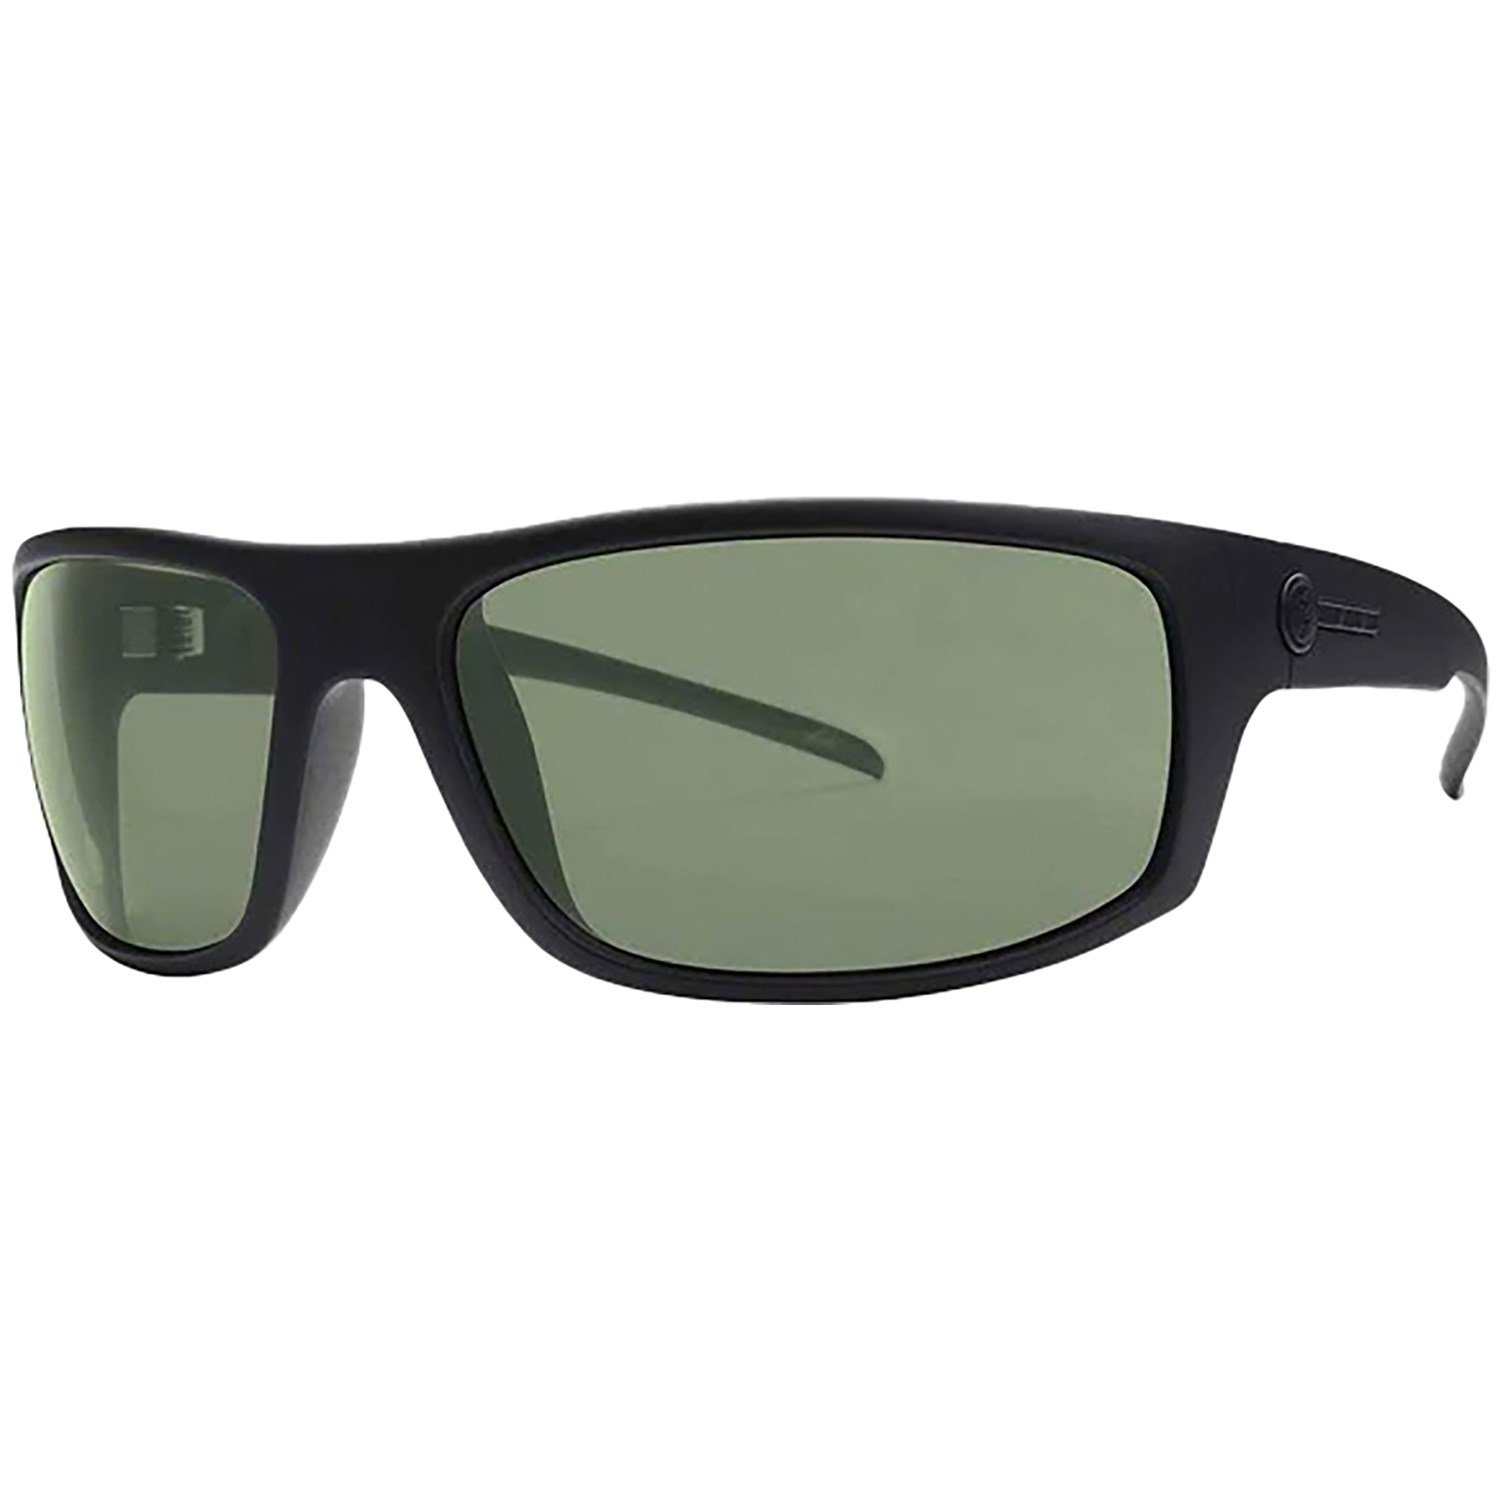 https://images.evo.com/imgp/zoom/228009/917810/electric-tech-one-sport-sunglasses-.jpg